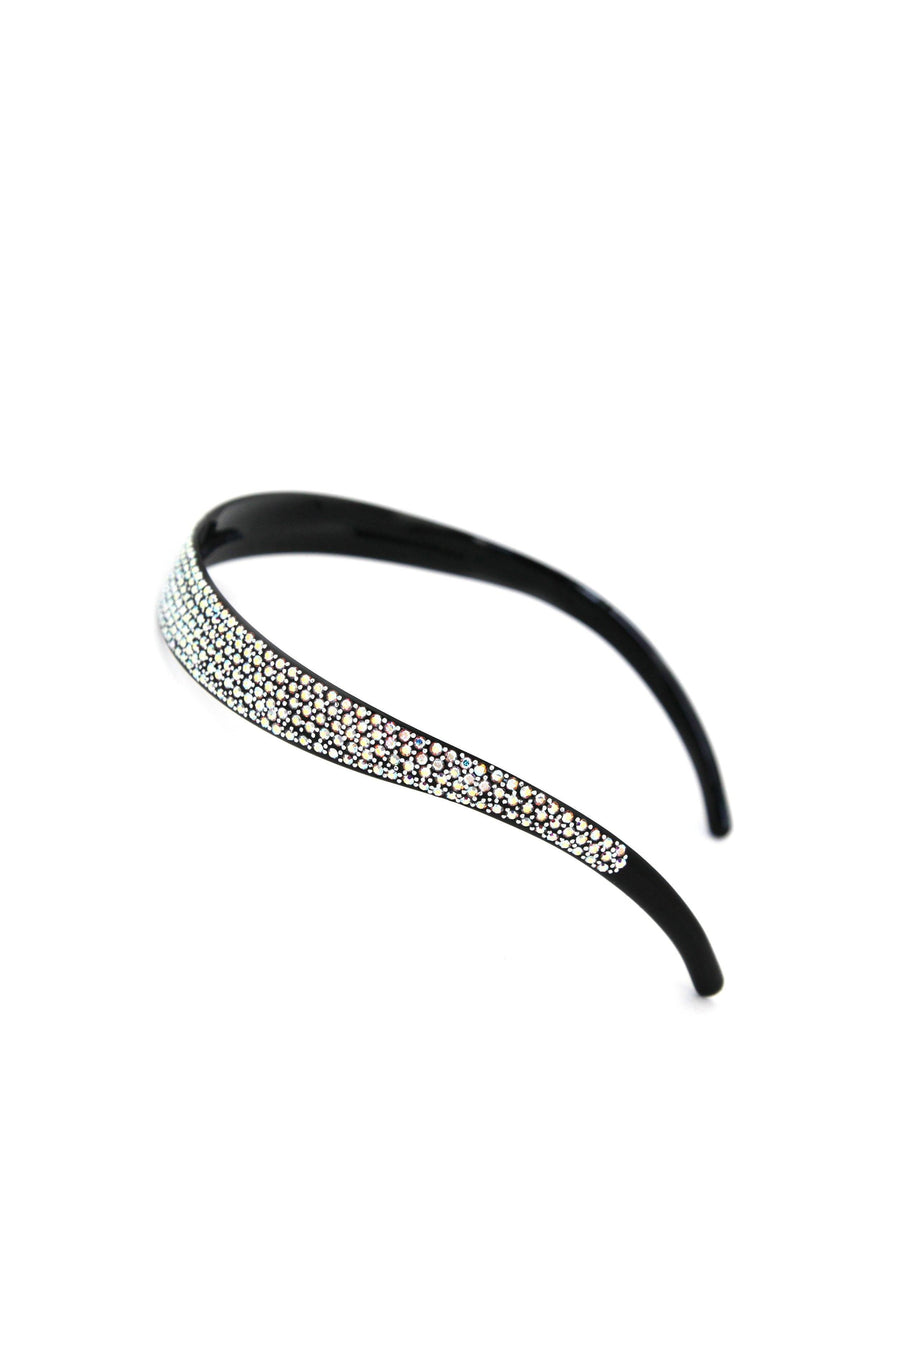 Soho Style Headband Clear Lightweight Crystal Covered Headband